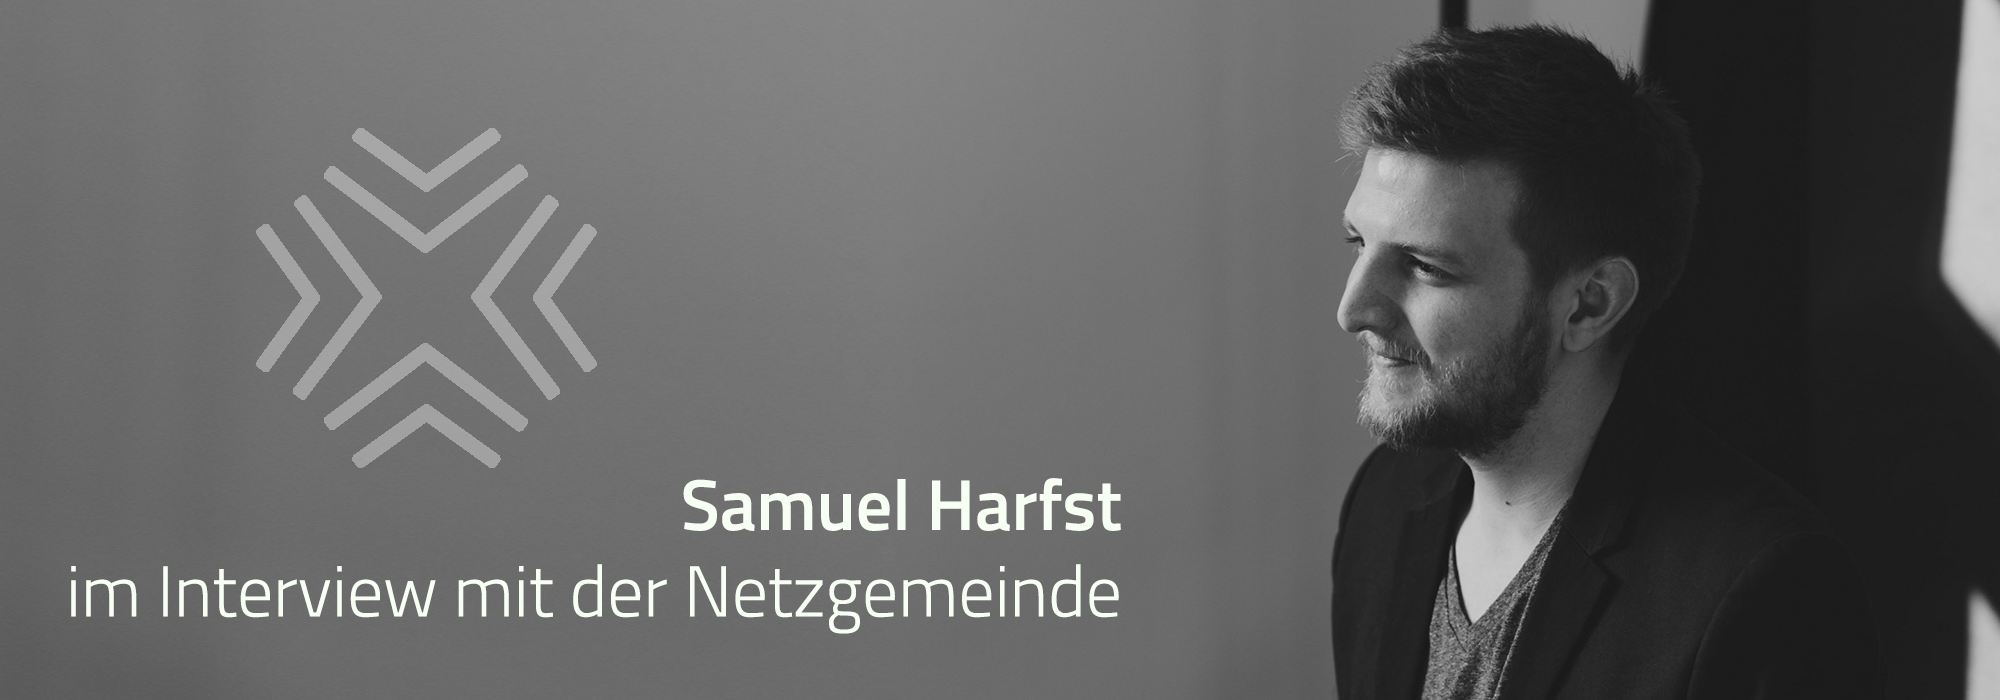 Samuel Harsft